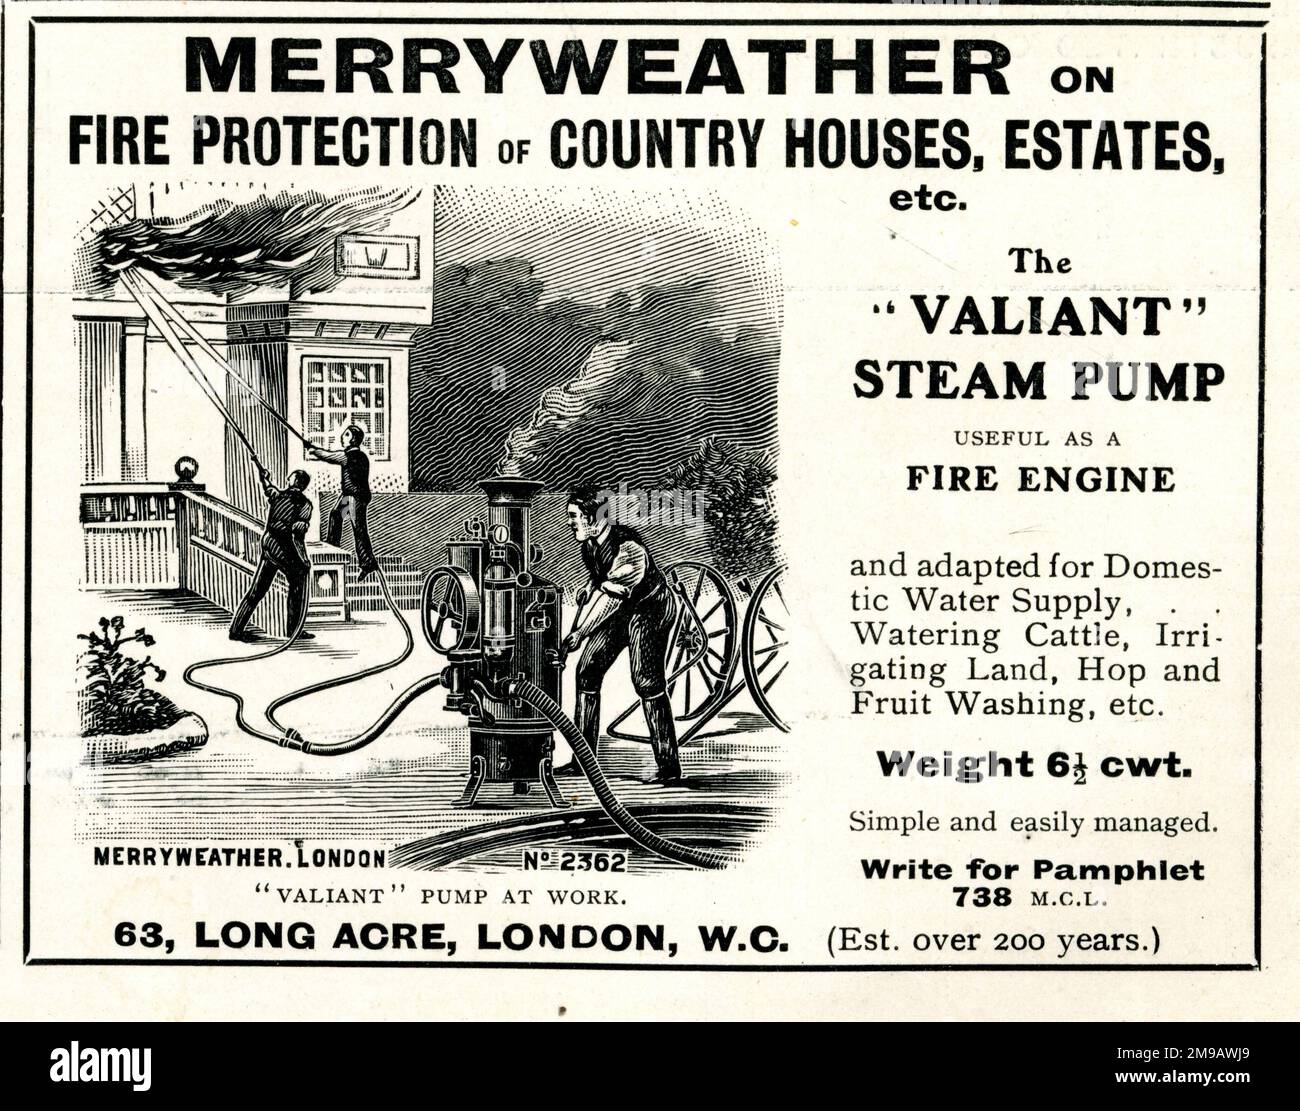 Werbespot, Merryweather, Long Acre, London, die Valiant Feuerwehr-Dampfpumpe, nützlich als Feuerwehrfahrzeug. Stockfoto